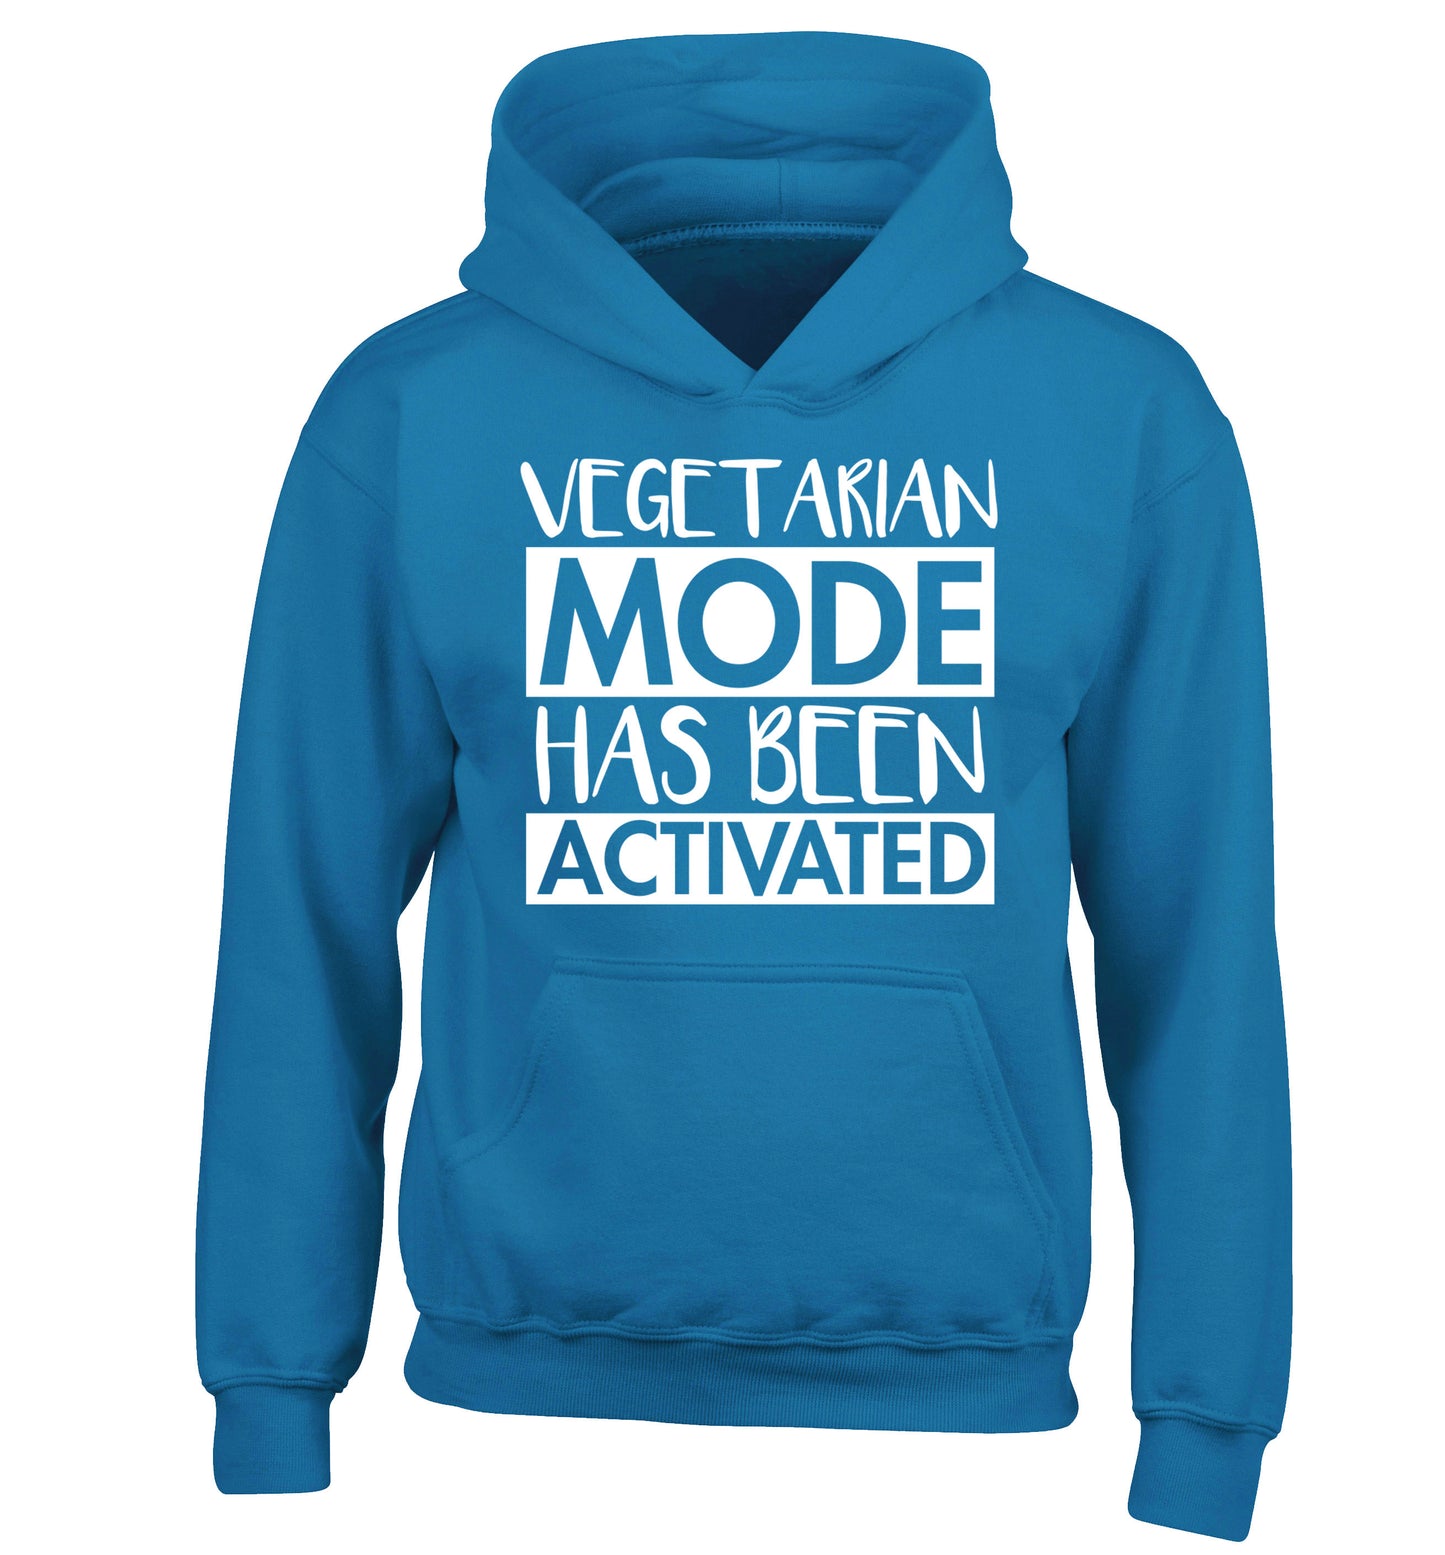 Vegetarian mode activated children's blue hoodie 12-14 Years